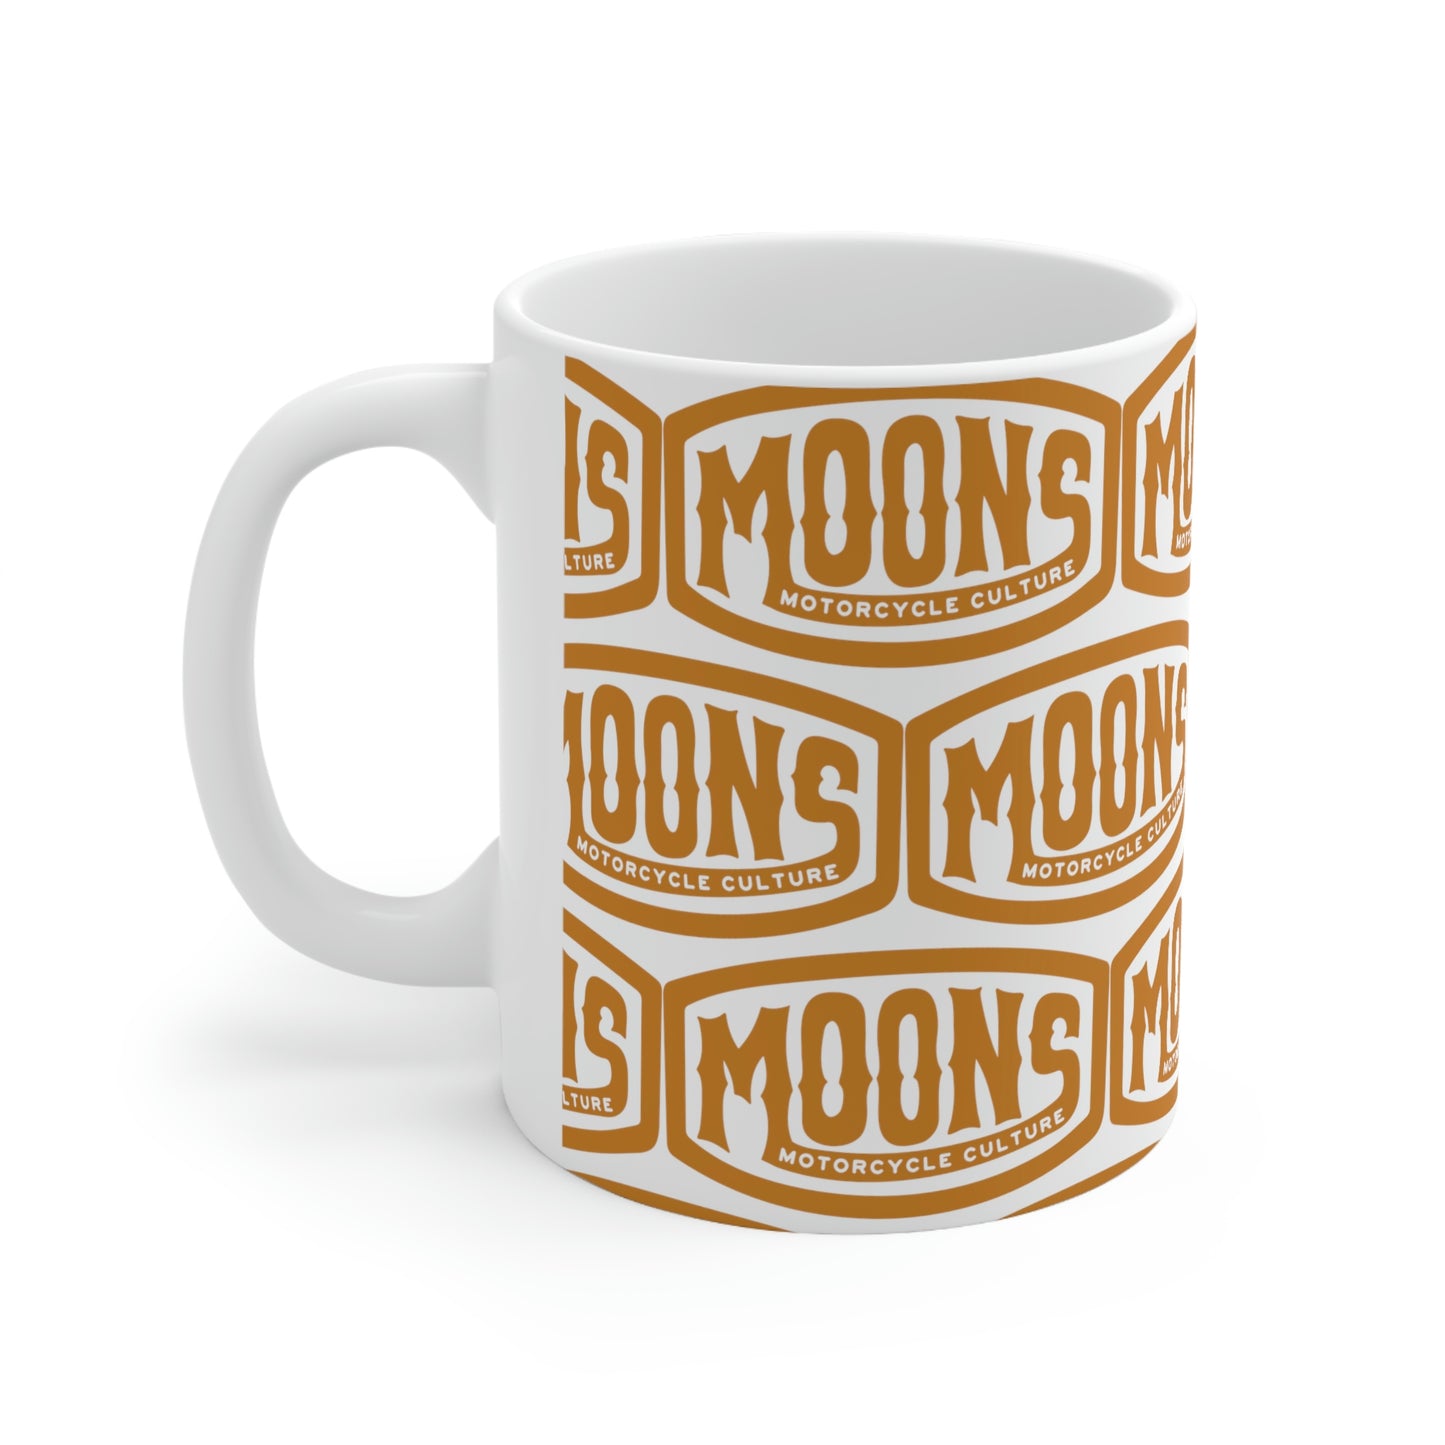 MOONSMC® Vintage Badge Ceramic Mug 11oz